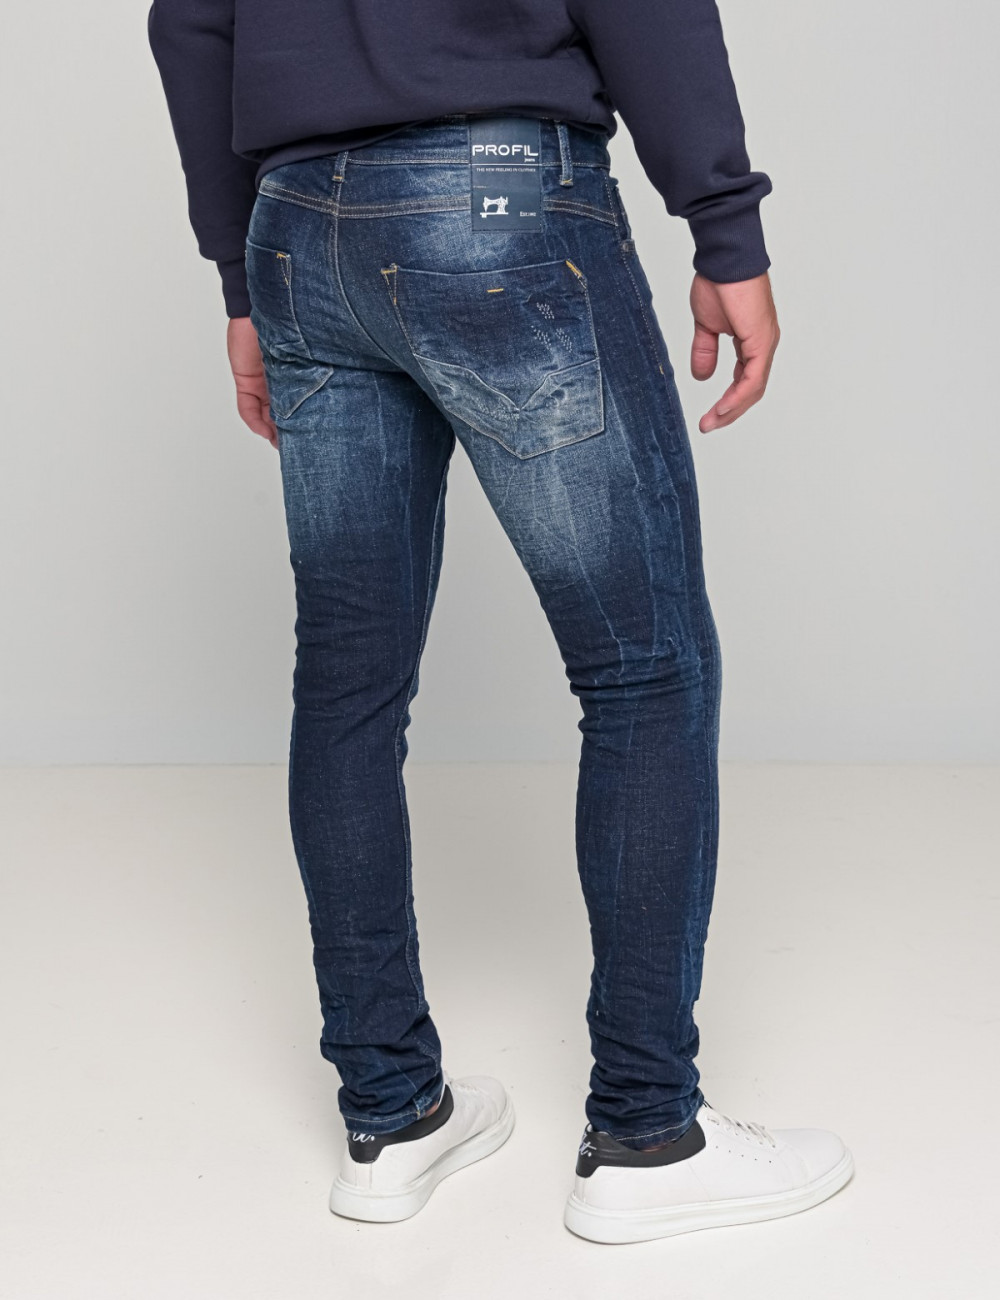 Profil ανδρικό μπλε τζιν παντελόνι με φθορές 900165